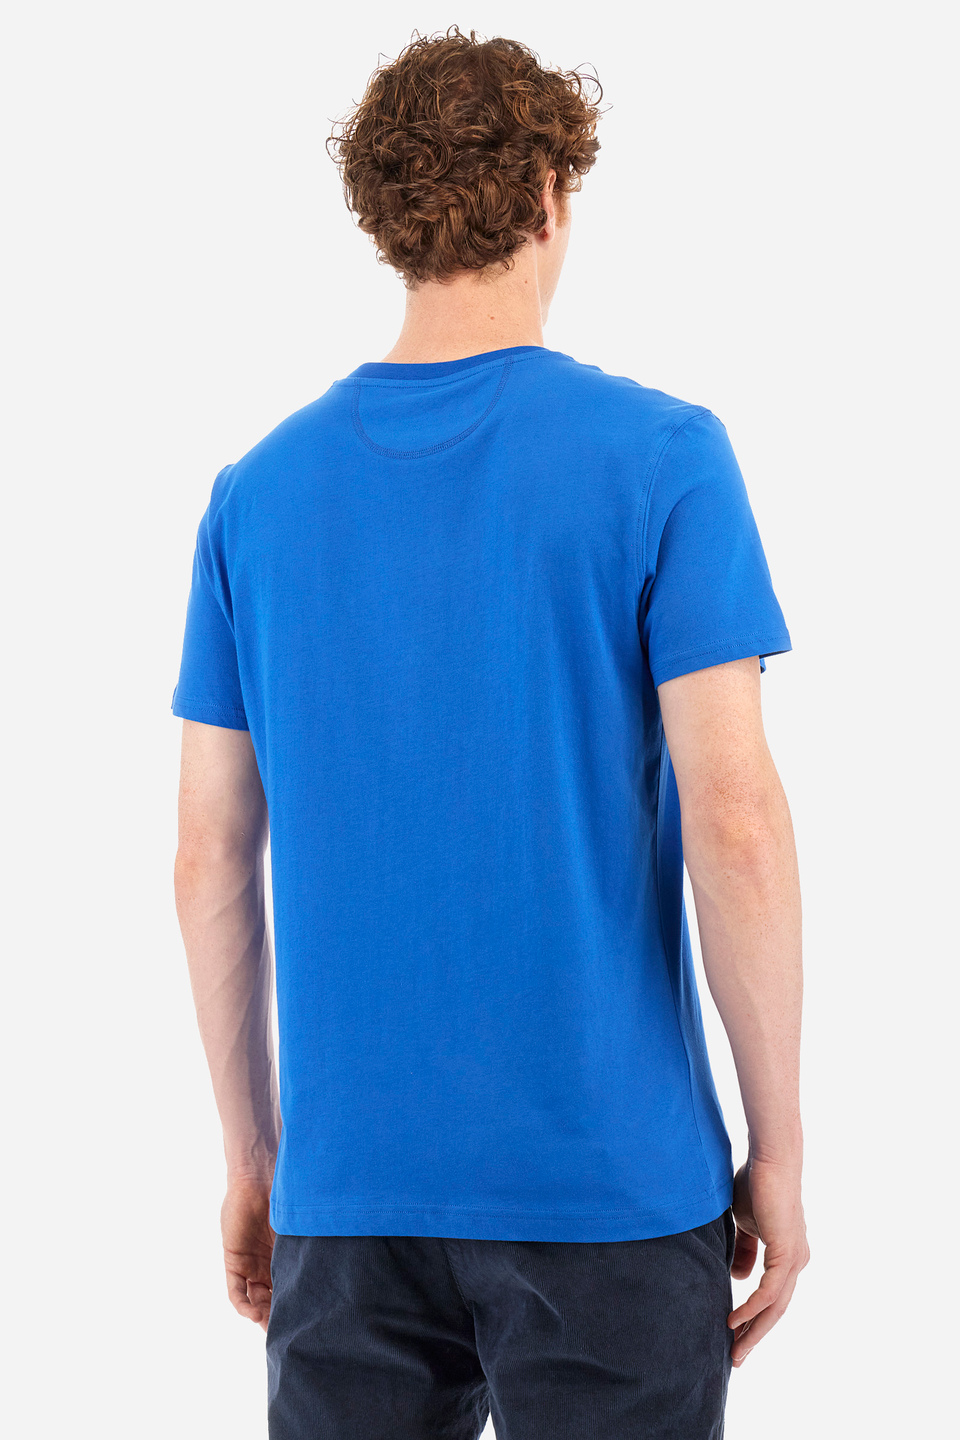 Man T-shirt in regular fit - Winford | La Martina - Official Online Shop